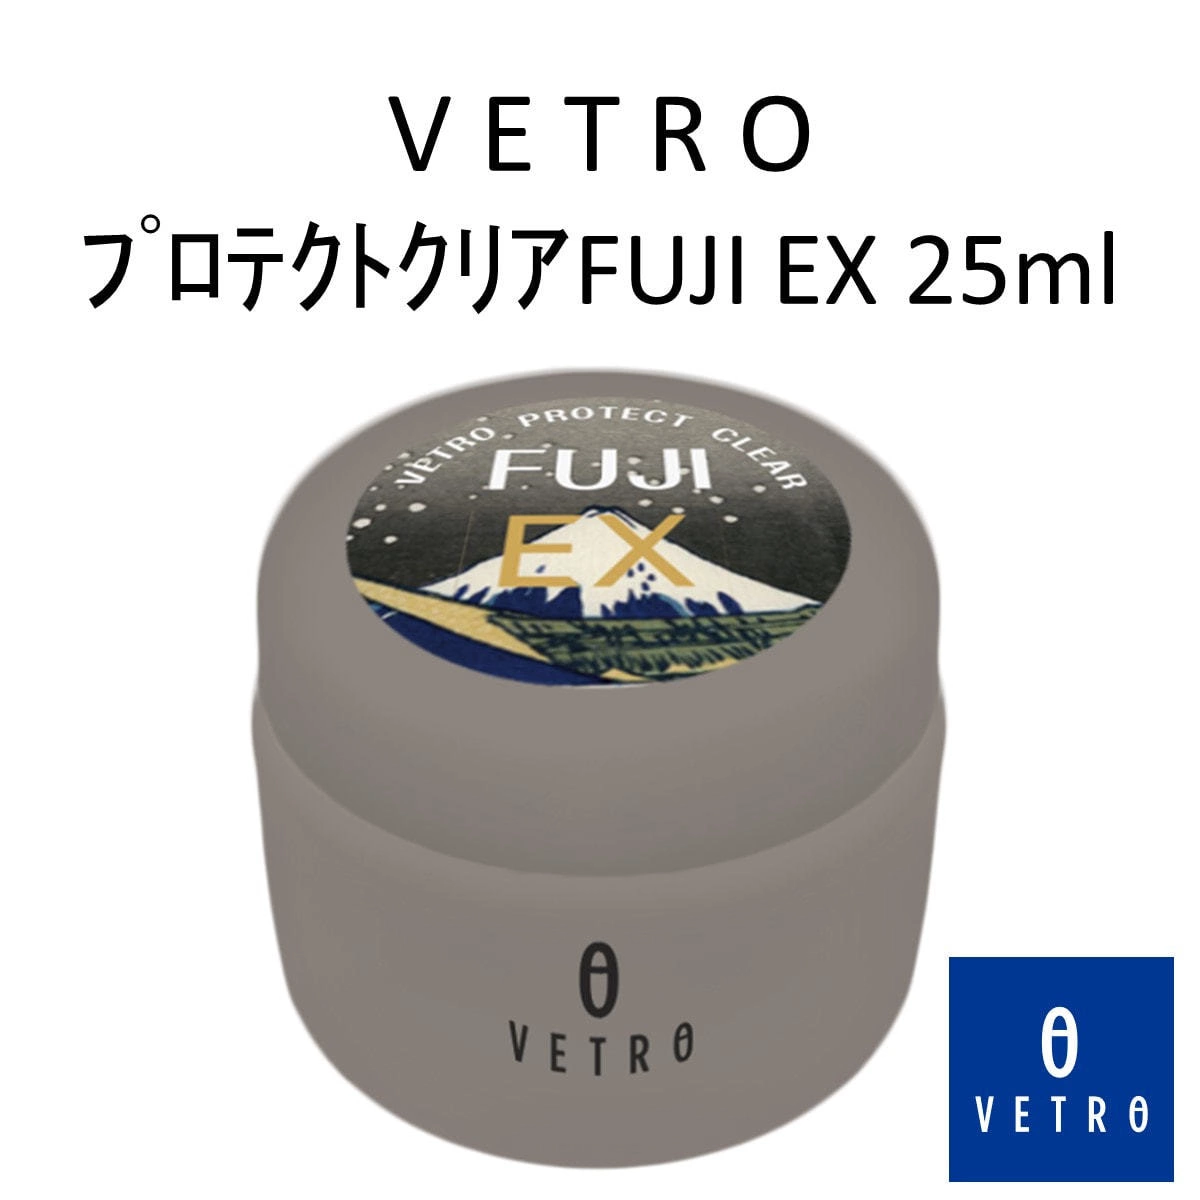 VETRO（べトロ）プロテクトクリア FUJI EX 25ml (VF-25) | 株式会社 